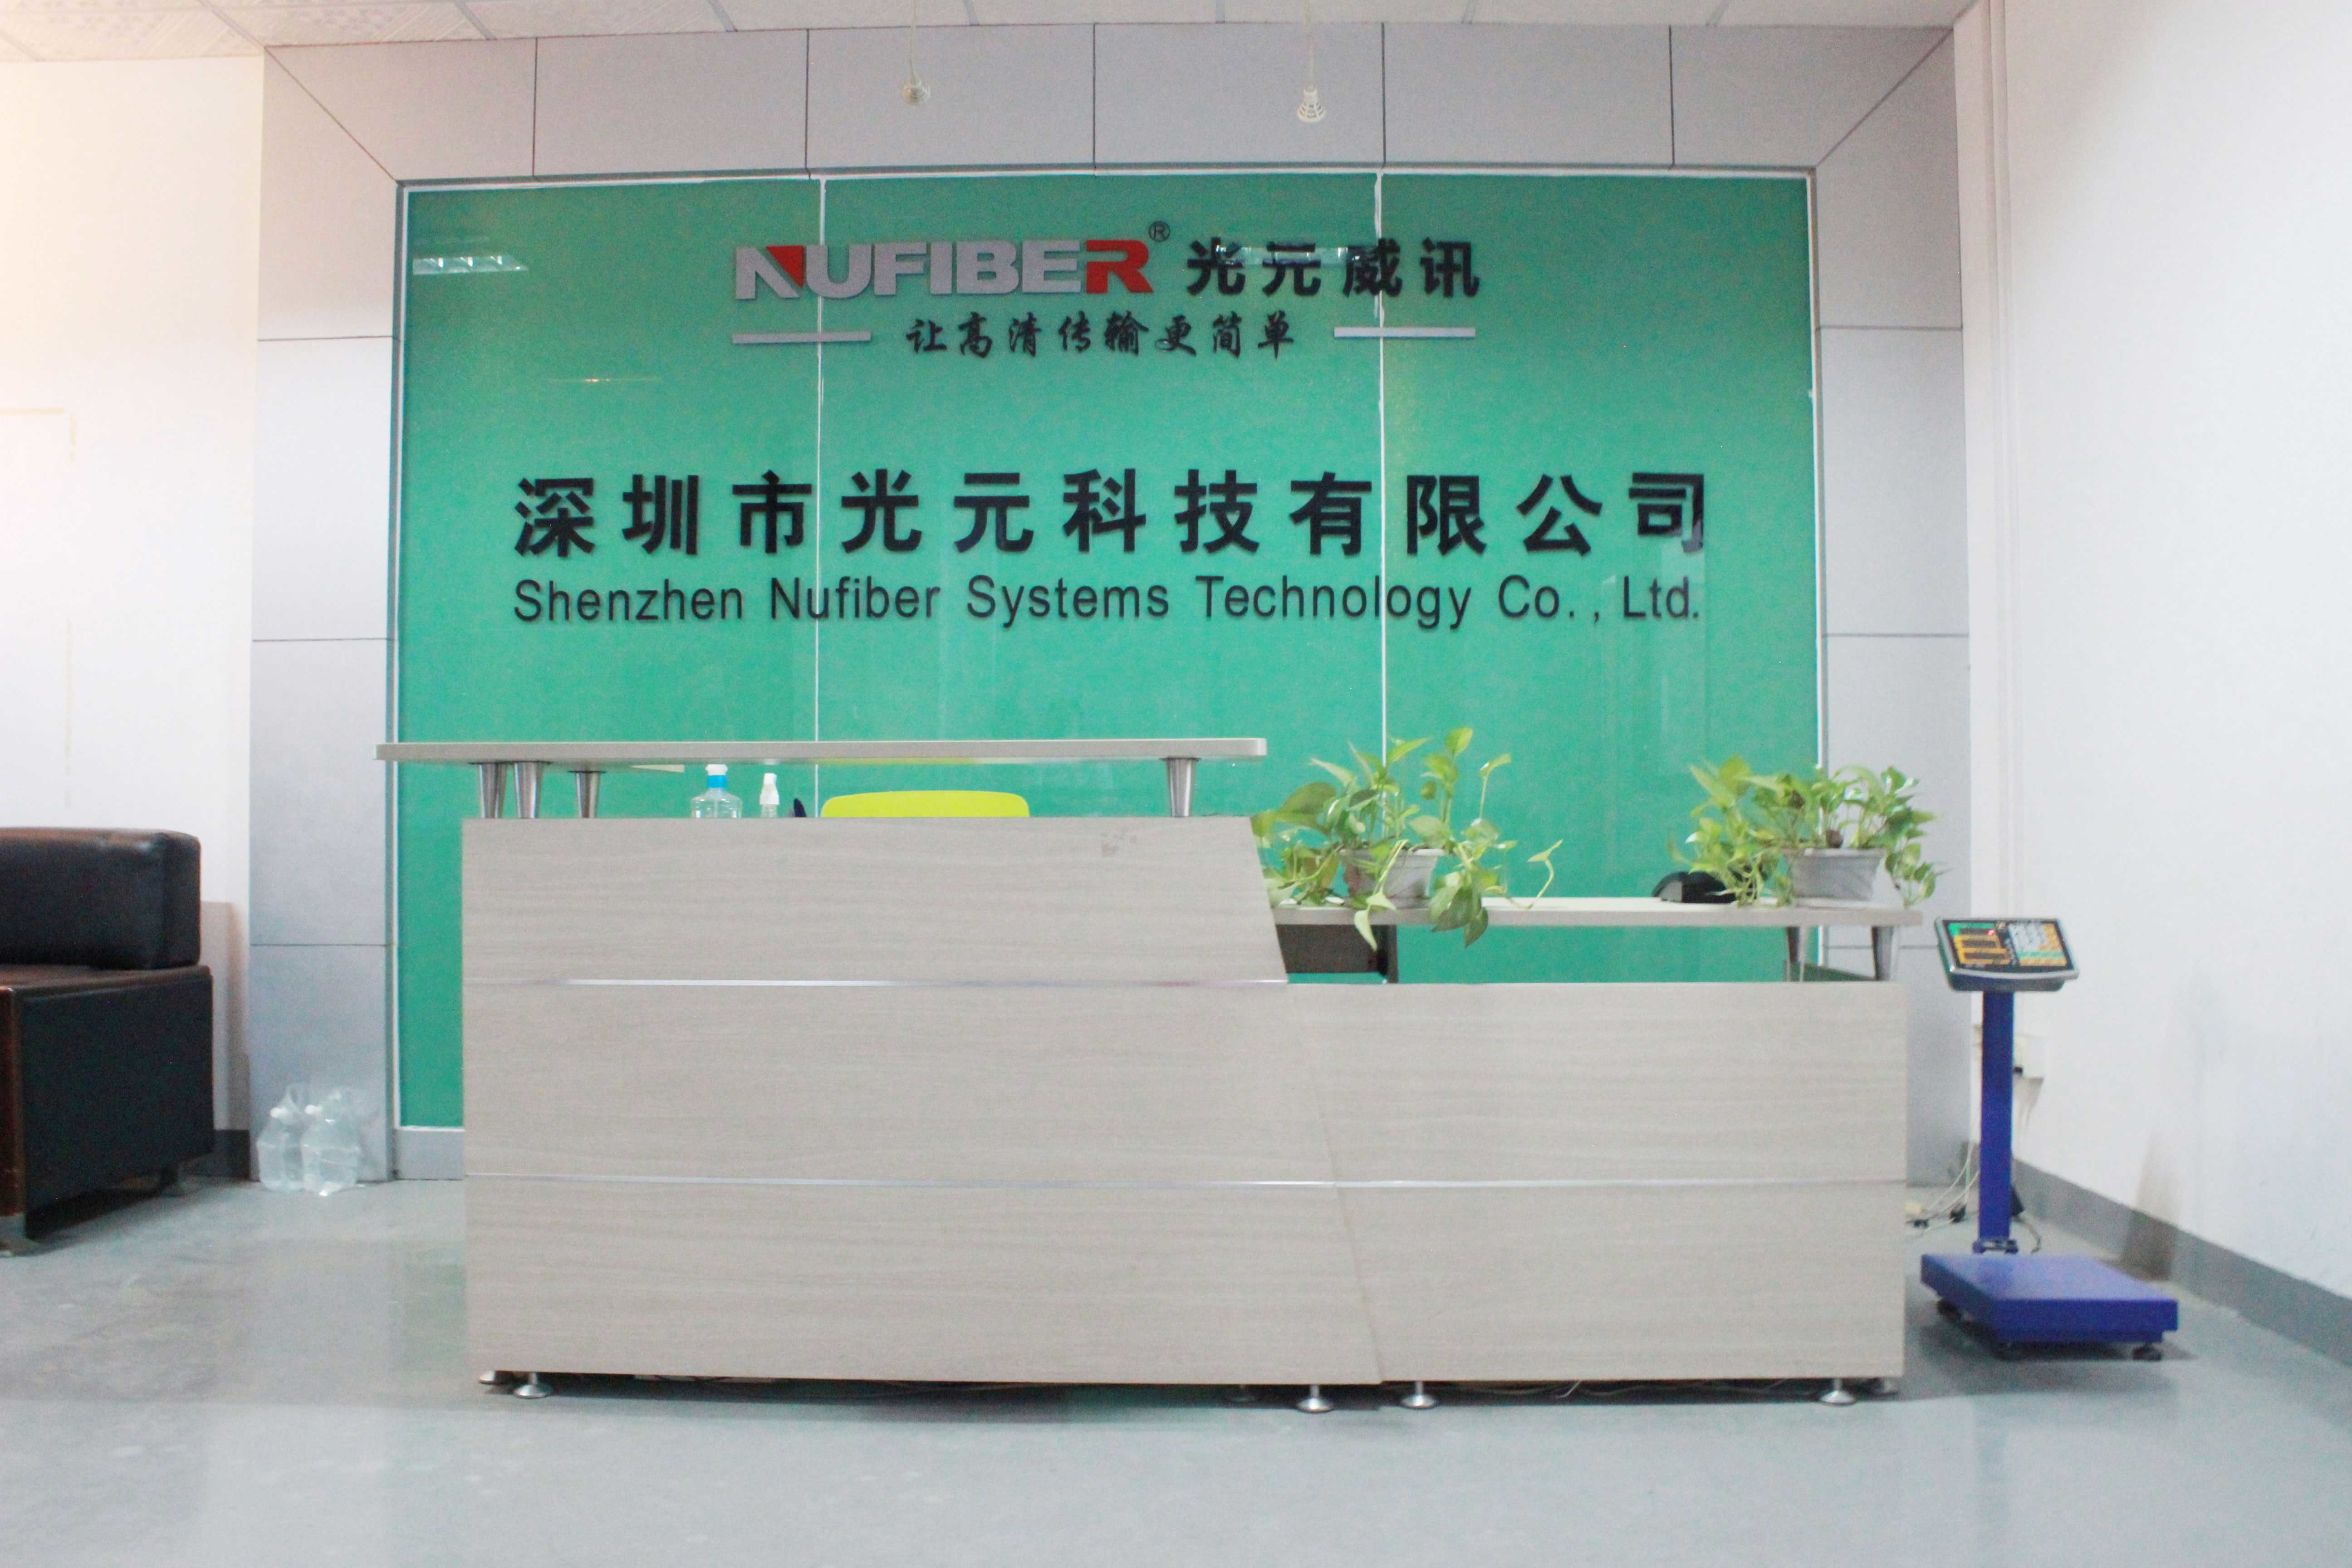 Chine Shenzhen Nufiber Systems Technology Co., Ltd.